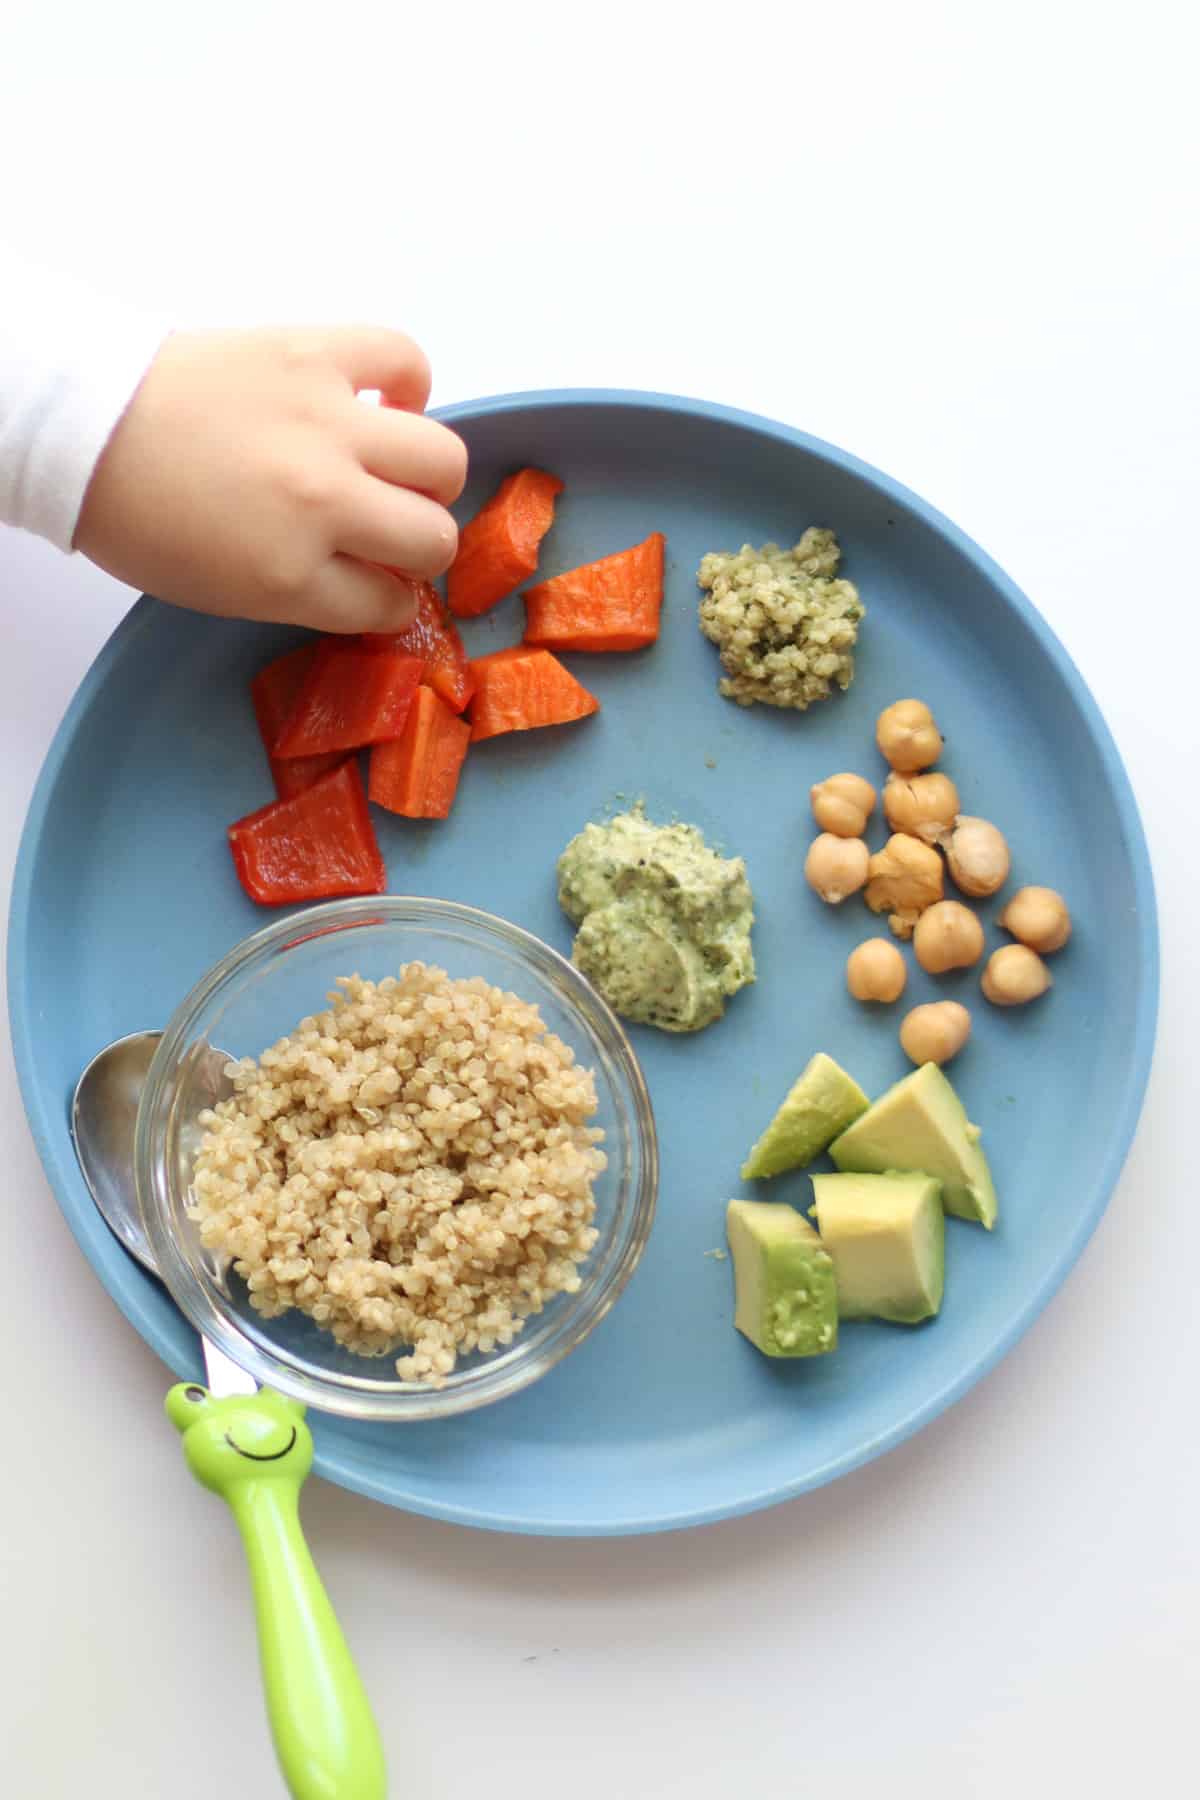 Toddler's plate with quinoa, carrots, chickpeas, pesto, and avocado.